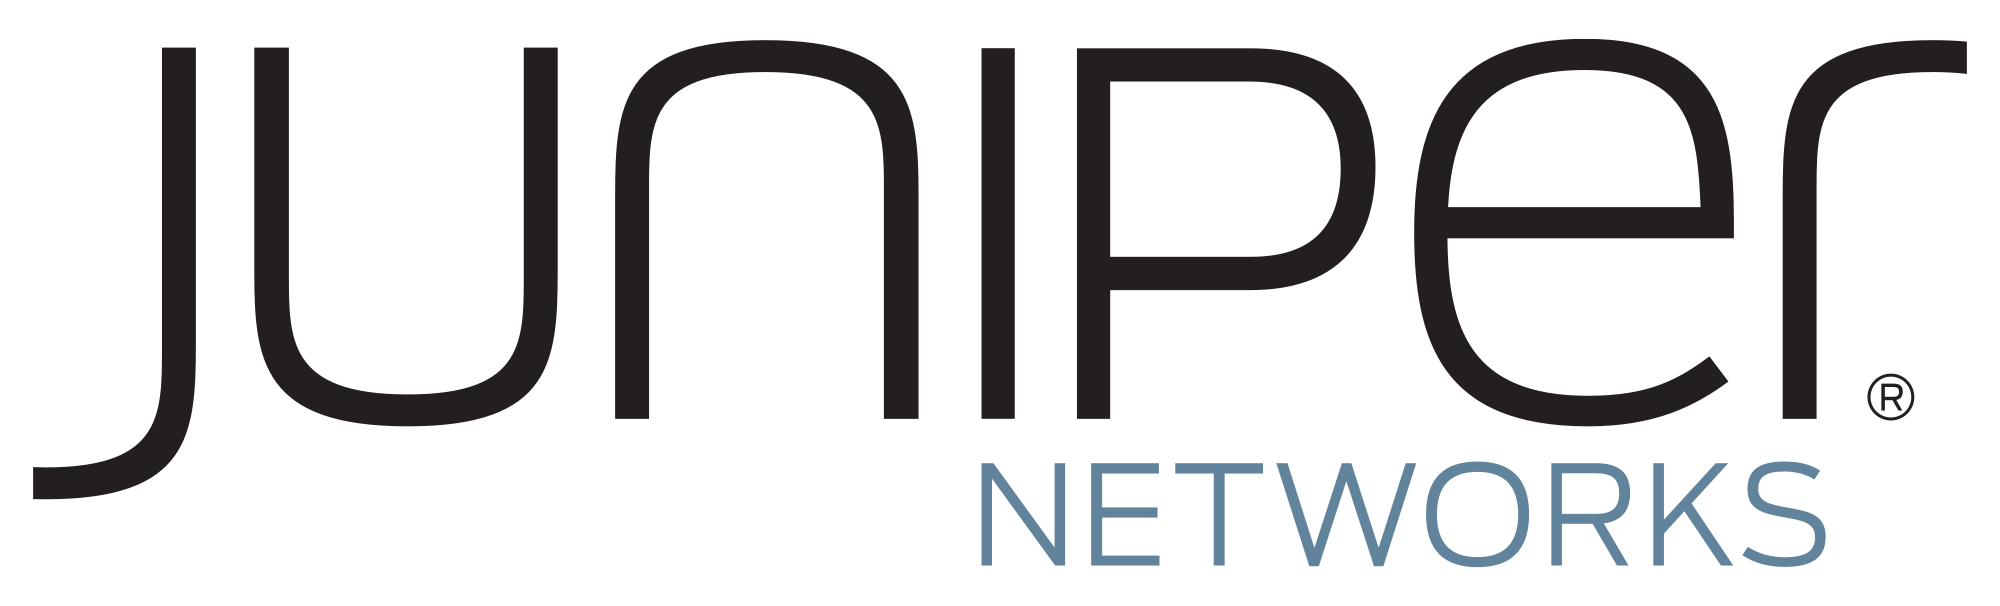 2000px-Juniper_Networks_logo.svg